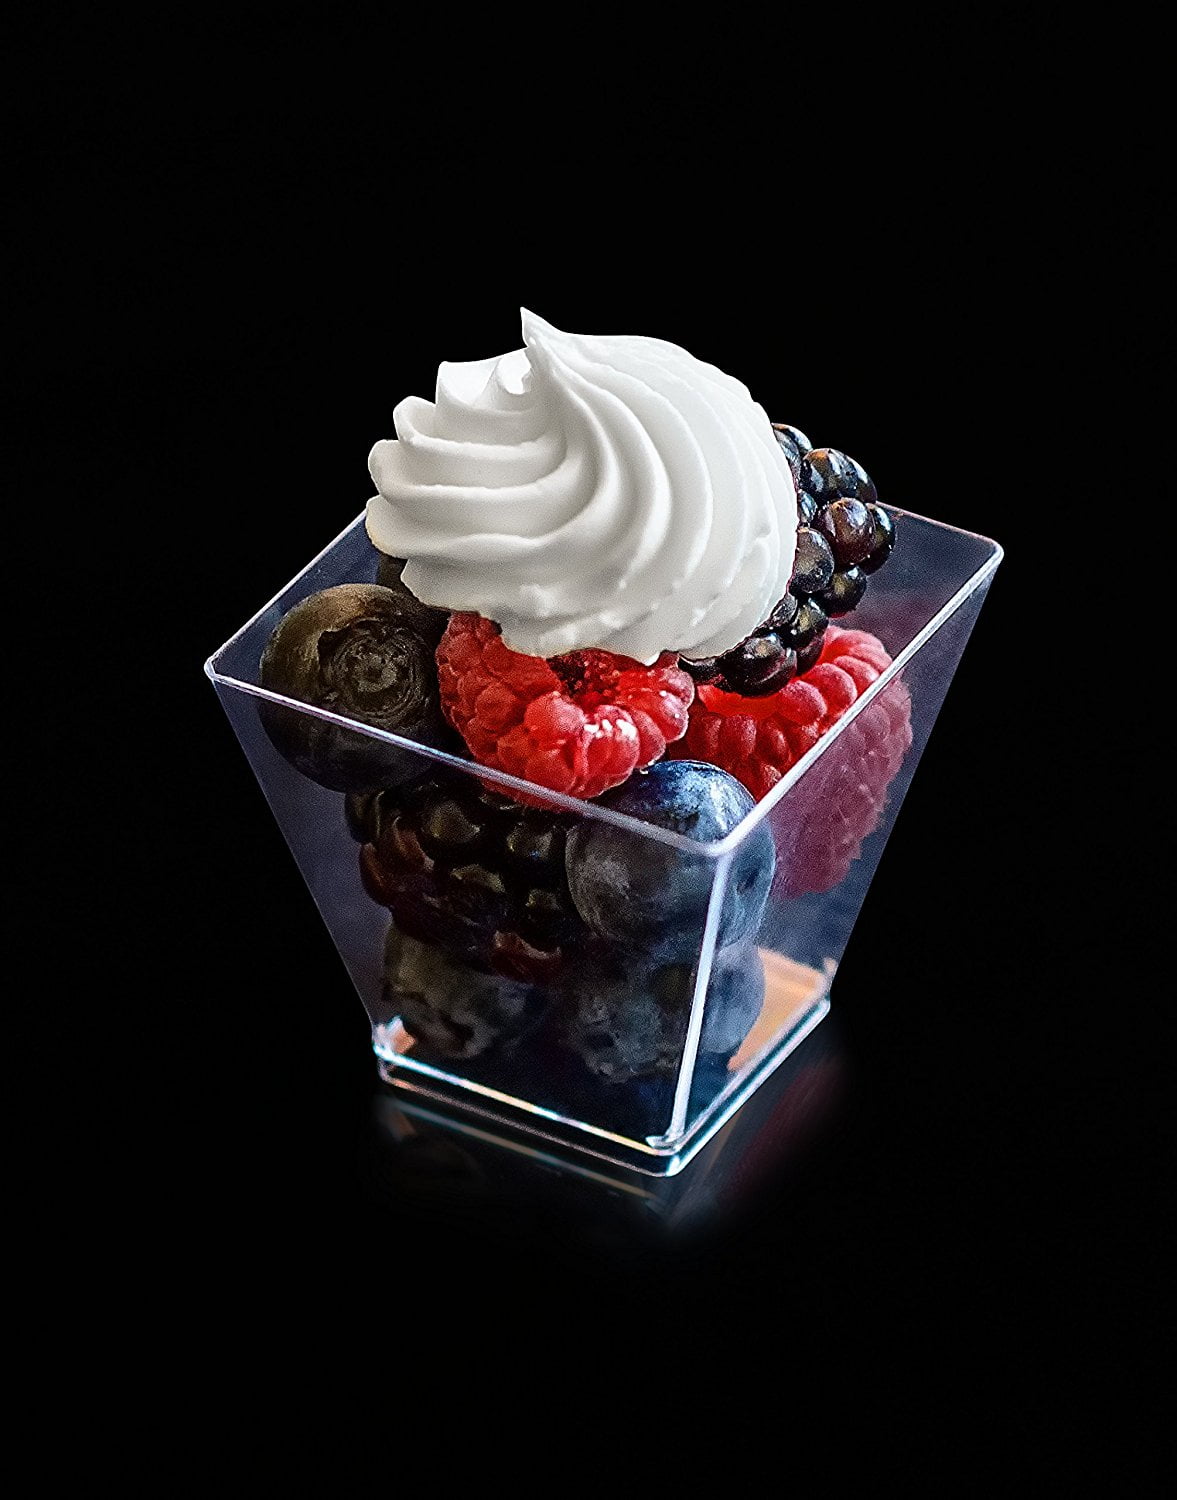 100 Mini Plastic Dessert Cups with Spoons - 3.3 oz Hexagon Cups - ilyapa